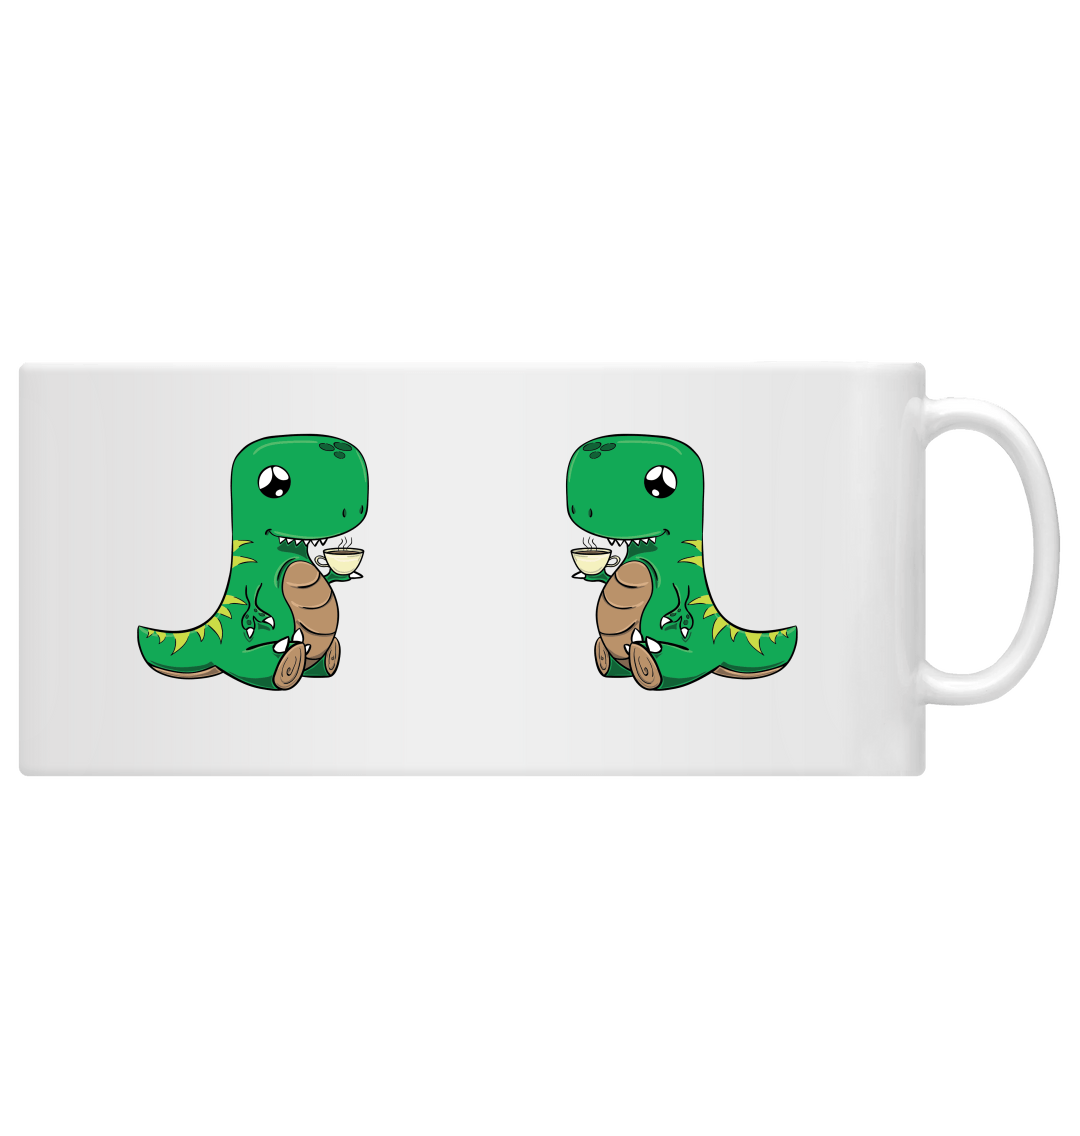  T-Rex I Dino I Trex Tea I Dinosaur With Tea I Tea-Rex